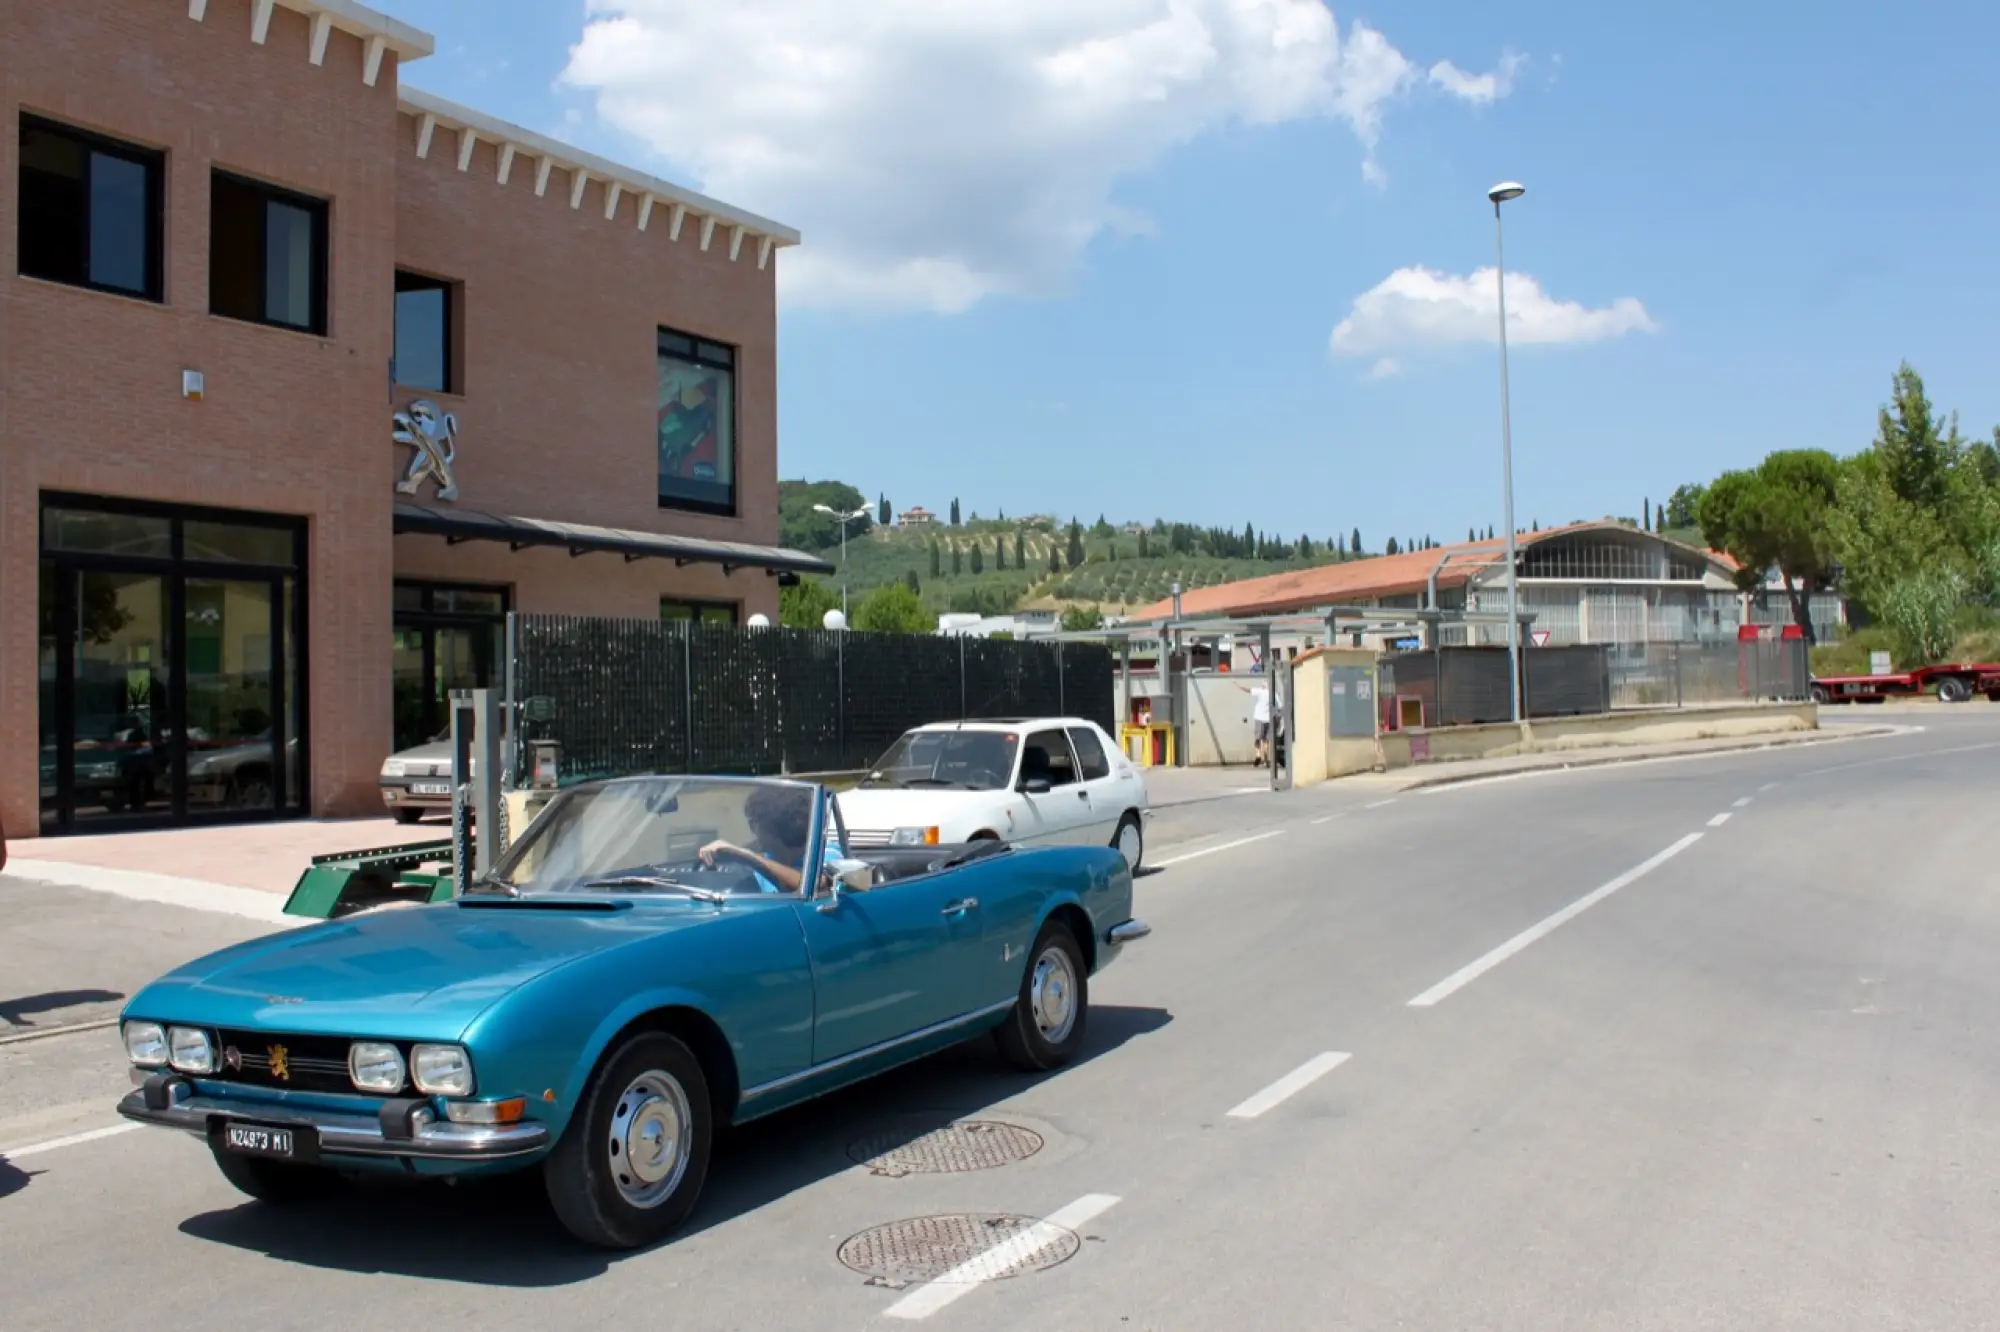 Galerie Peugeot - Evento in Toscana a San Gimignano 21 e 22 luglio 2015 - 90